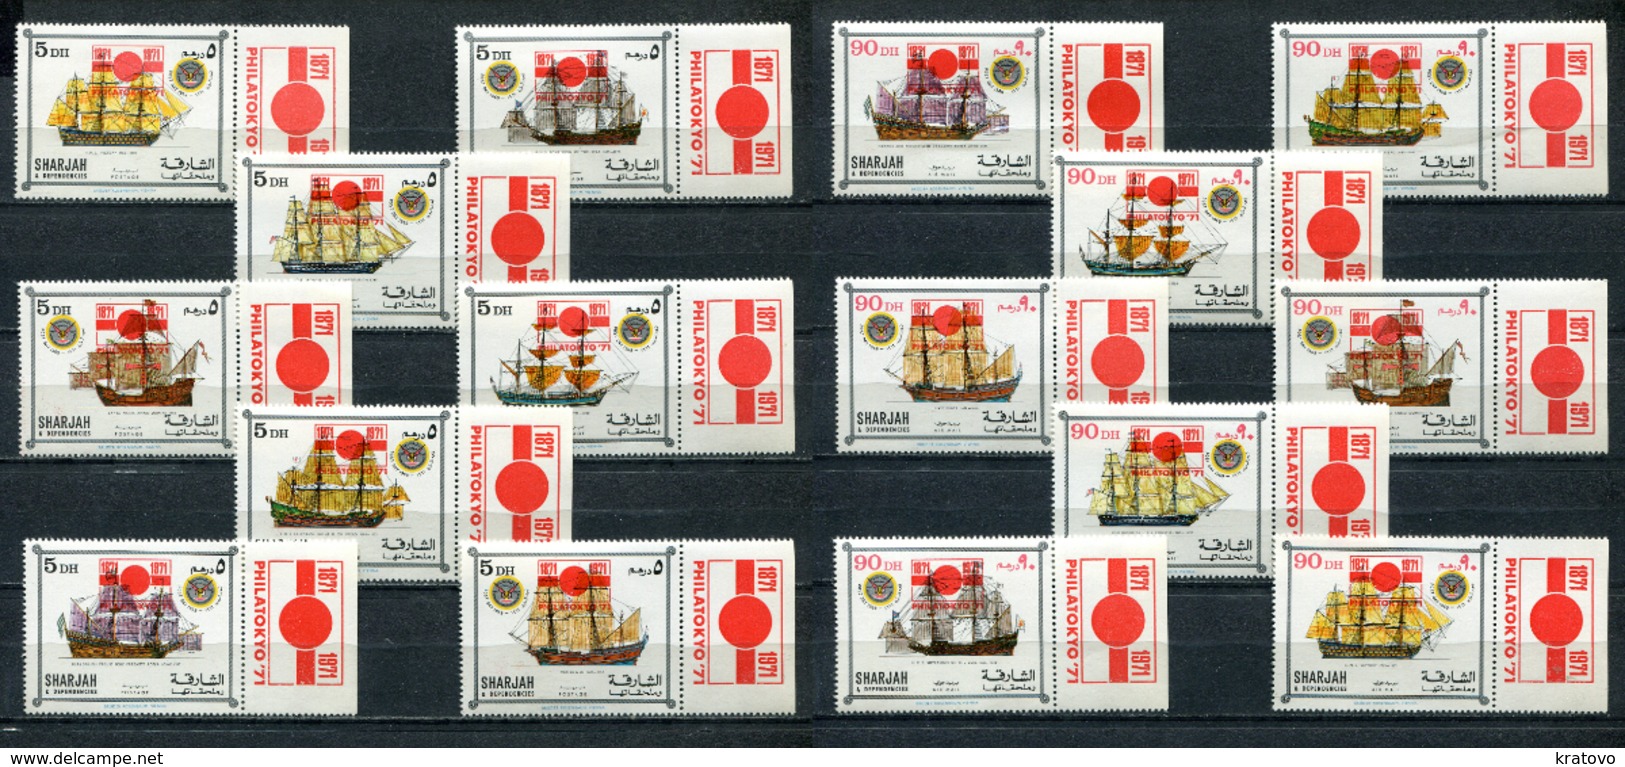 Sharjah 1972 Mi # 1100 - 1115 PHILATOKYO Set Of 16 Stamps MNH - Sharjah